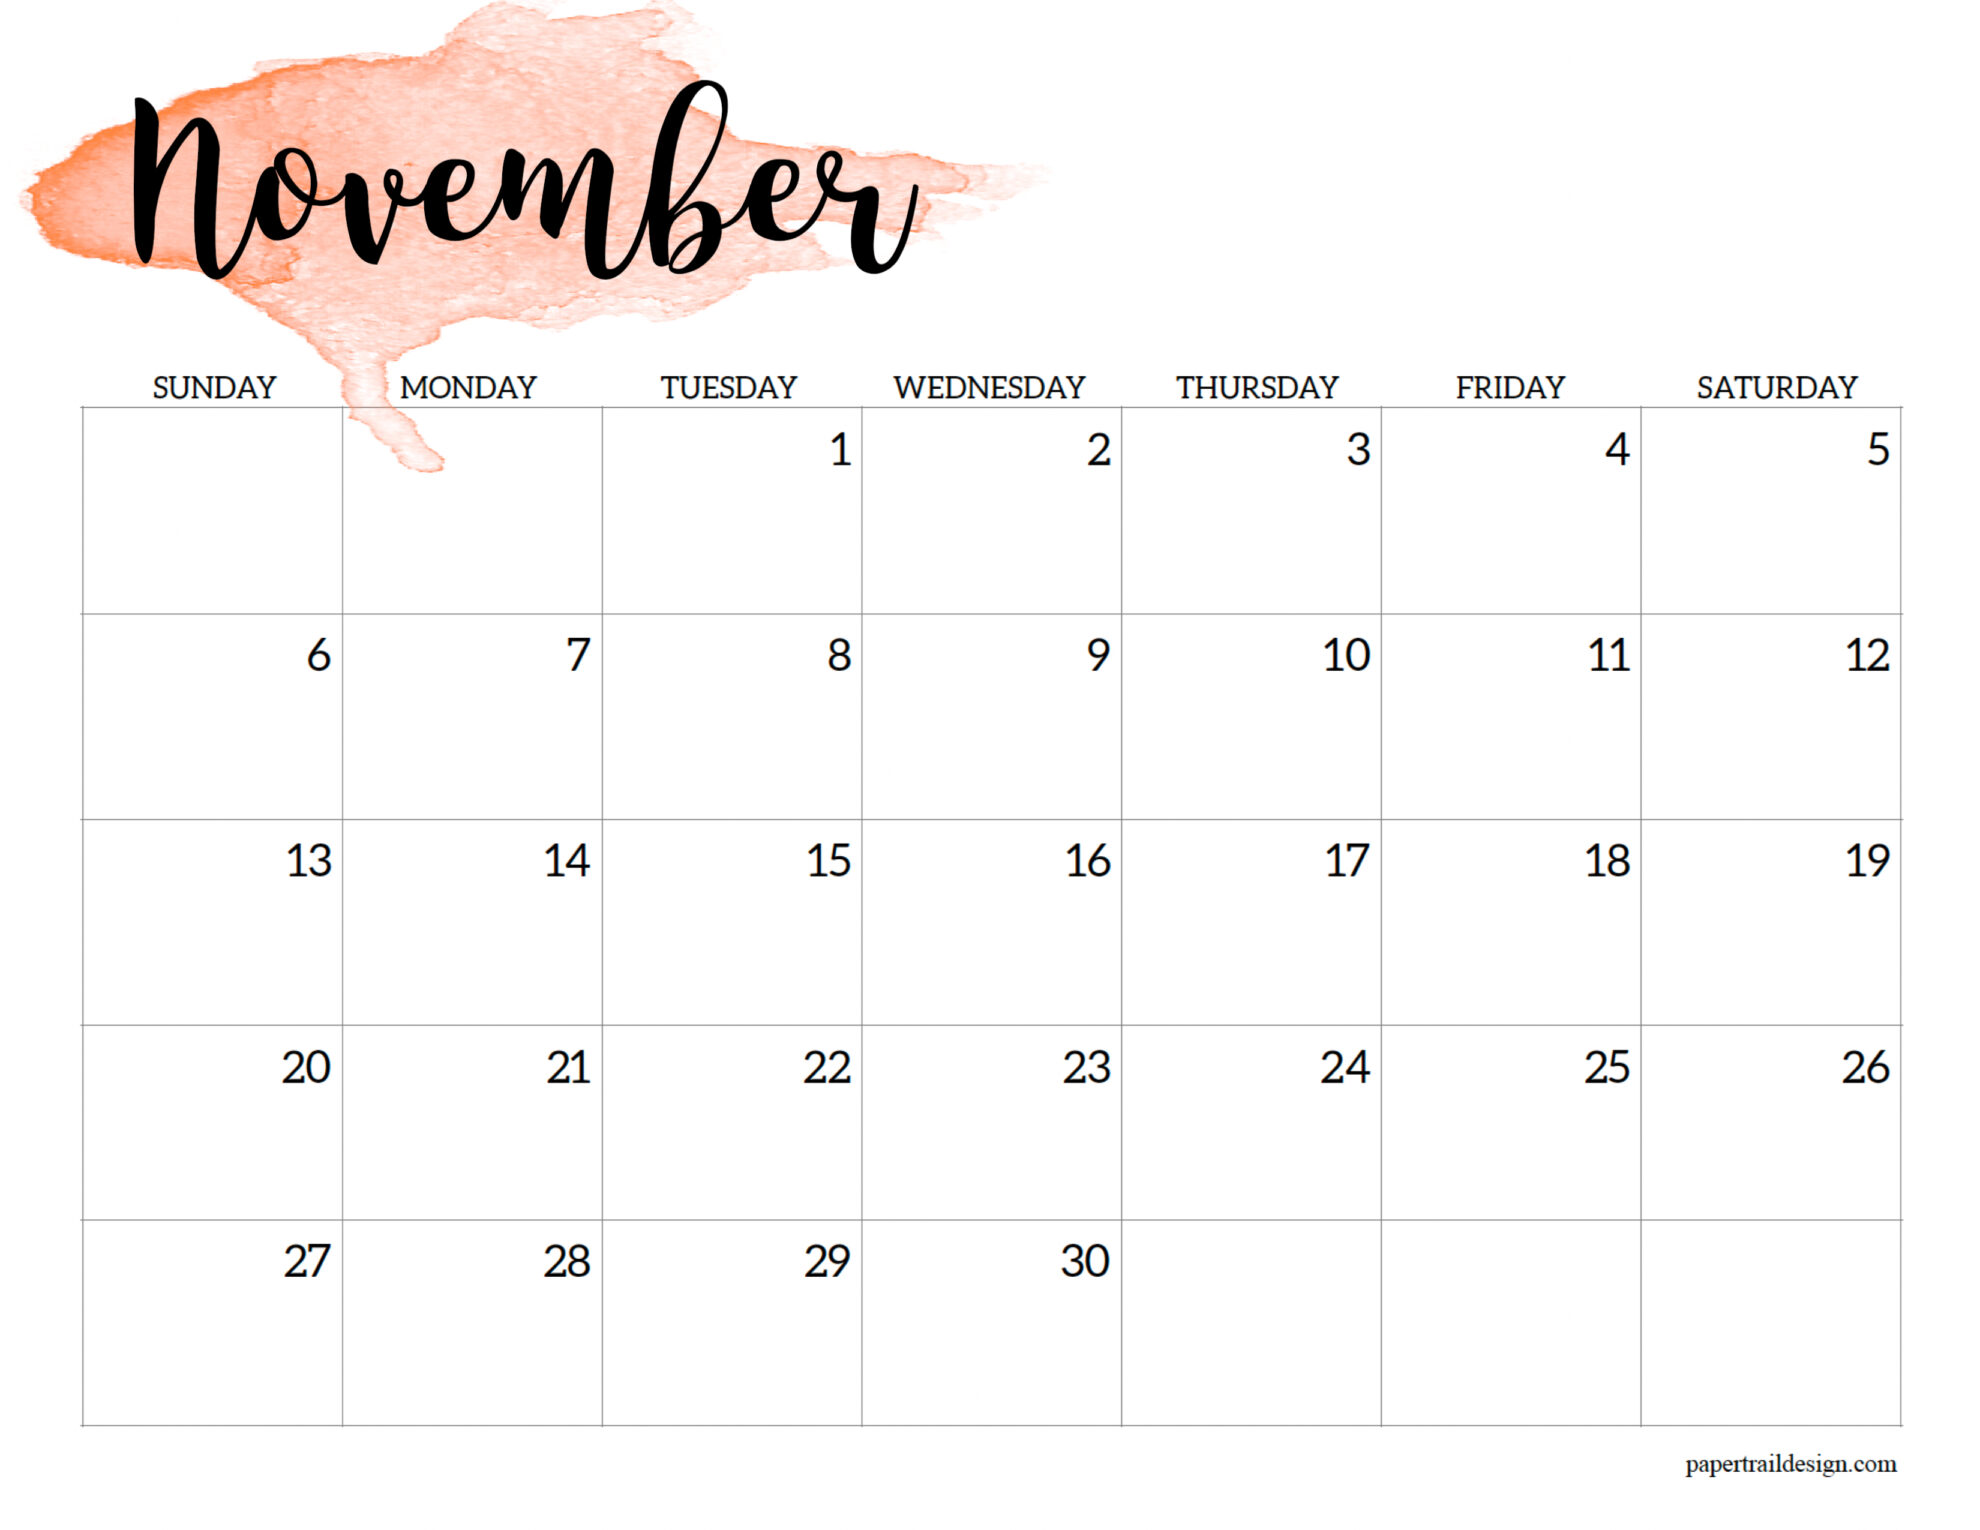 Nov Calendar 2022 Printable 2022 Calendar Printable - Watercolor - Paper Trail Design